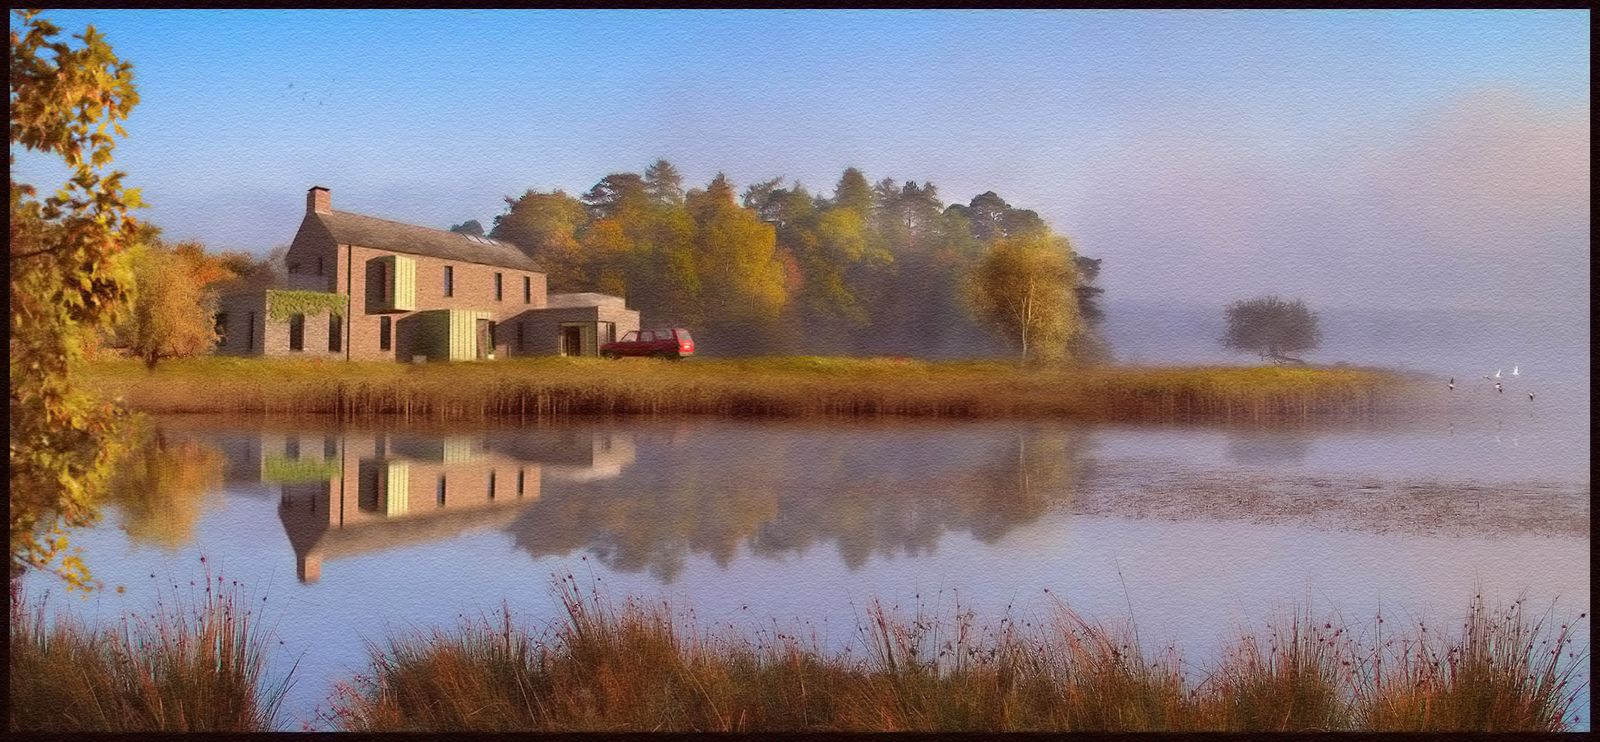 Country house misty morning NPR.jpg